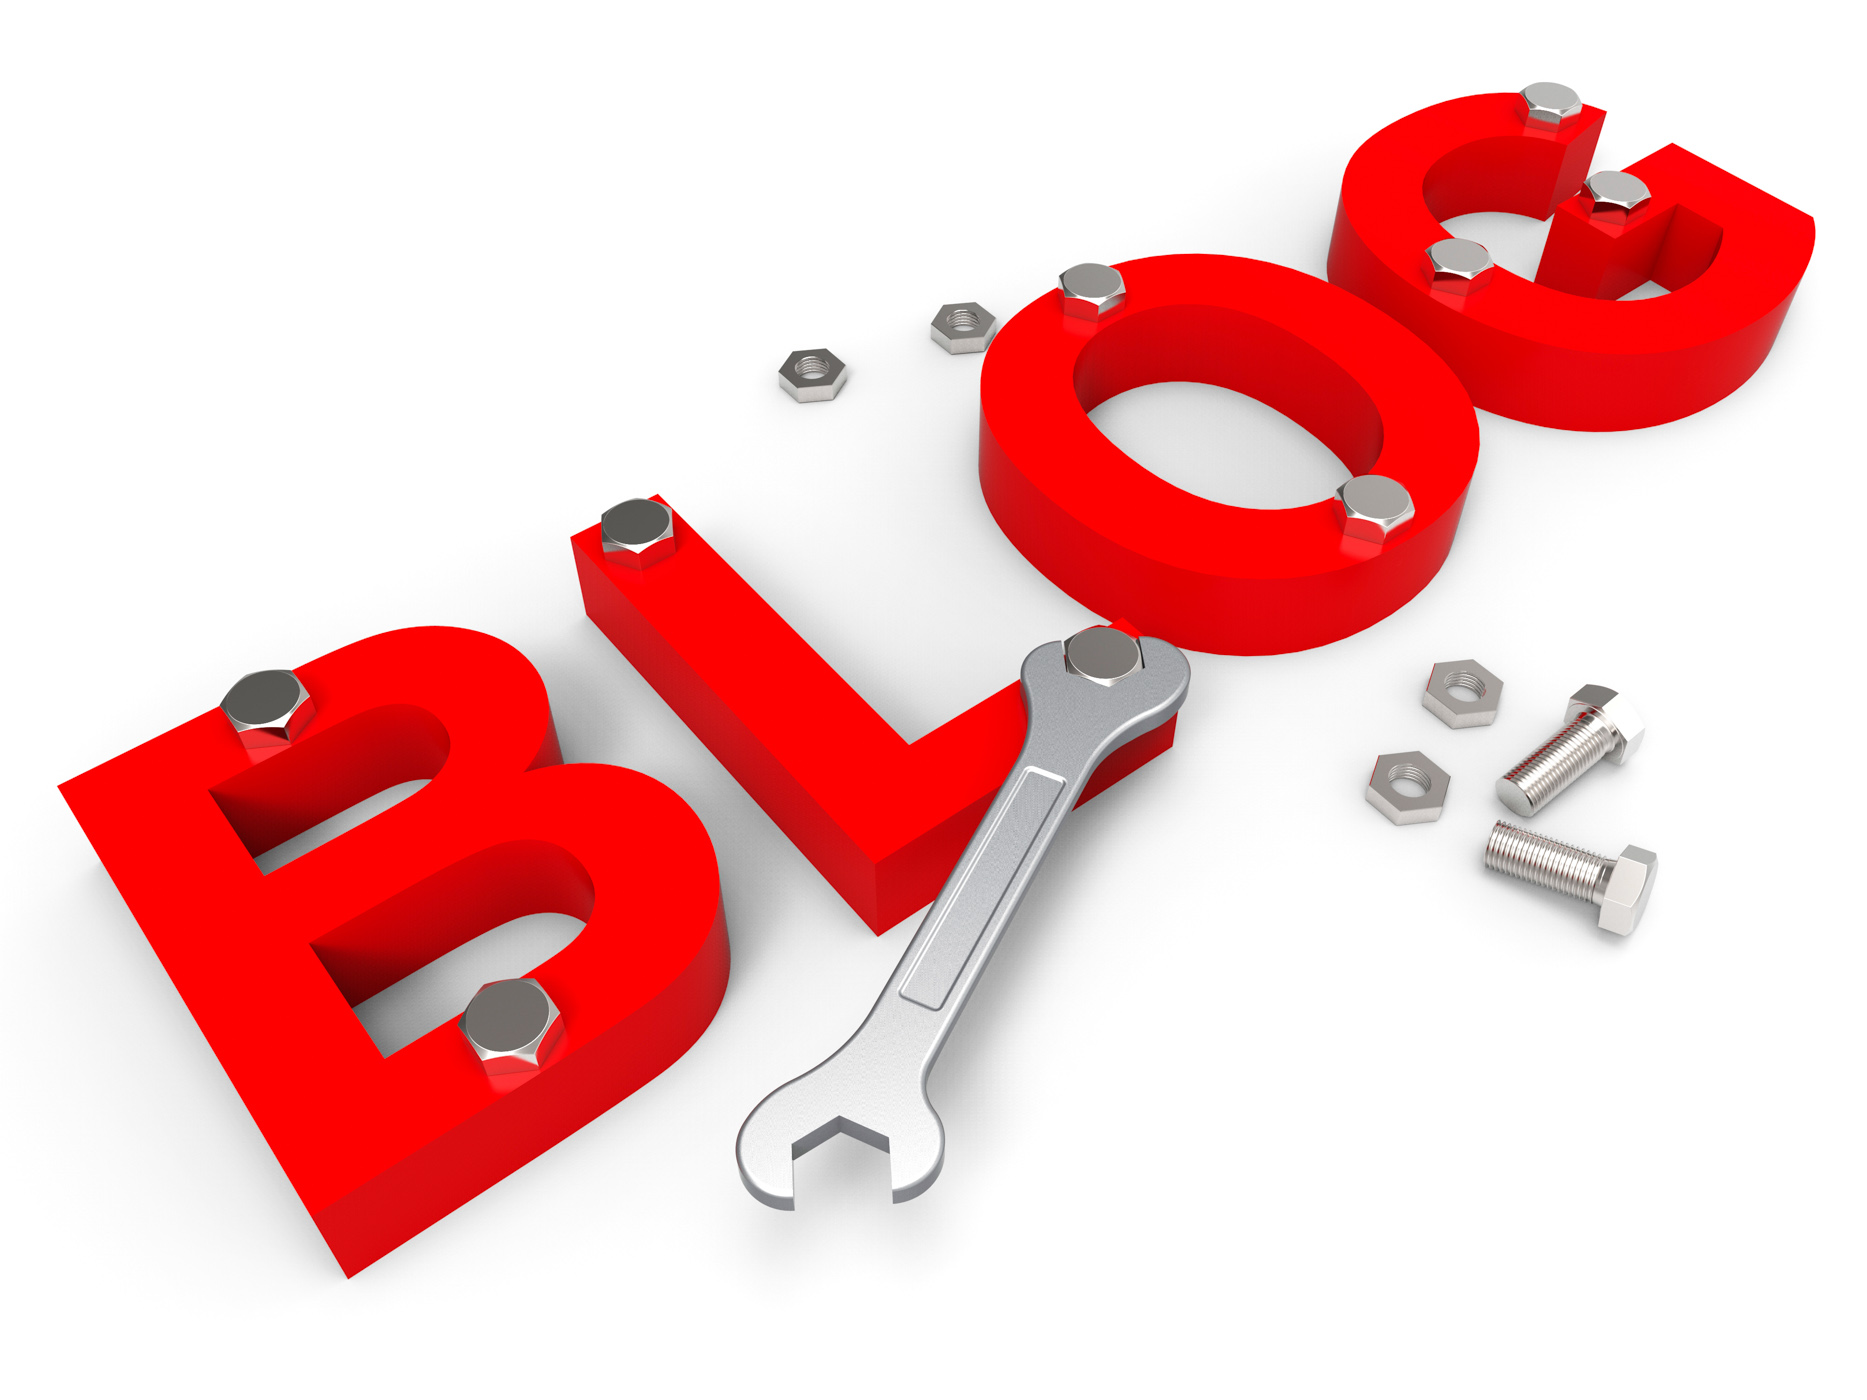 Blog tools indicates world wide web and blogger photo